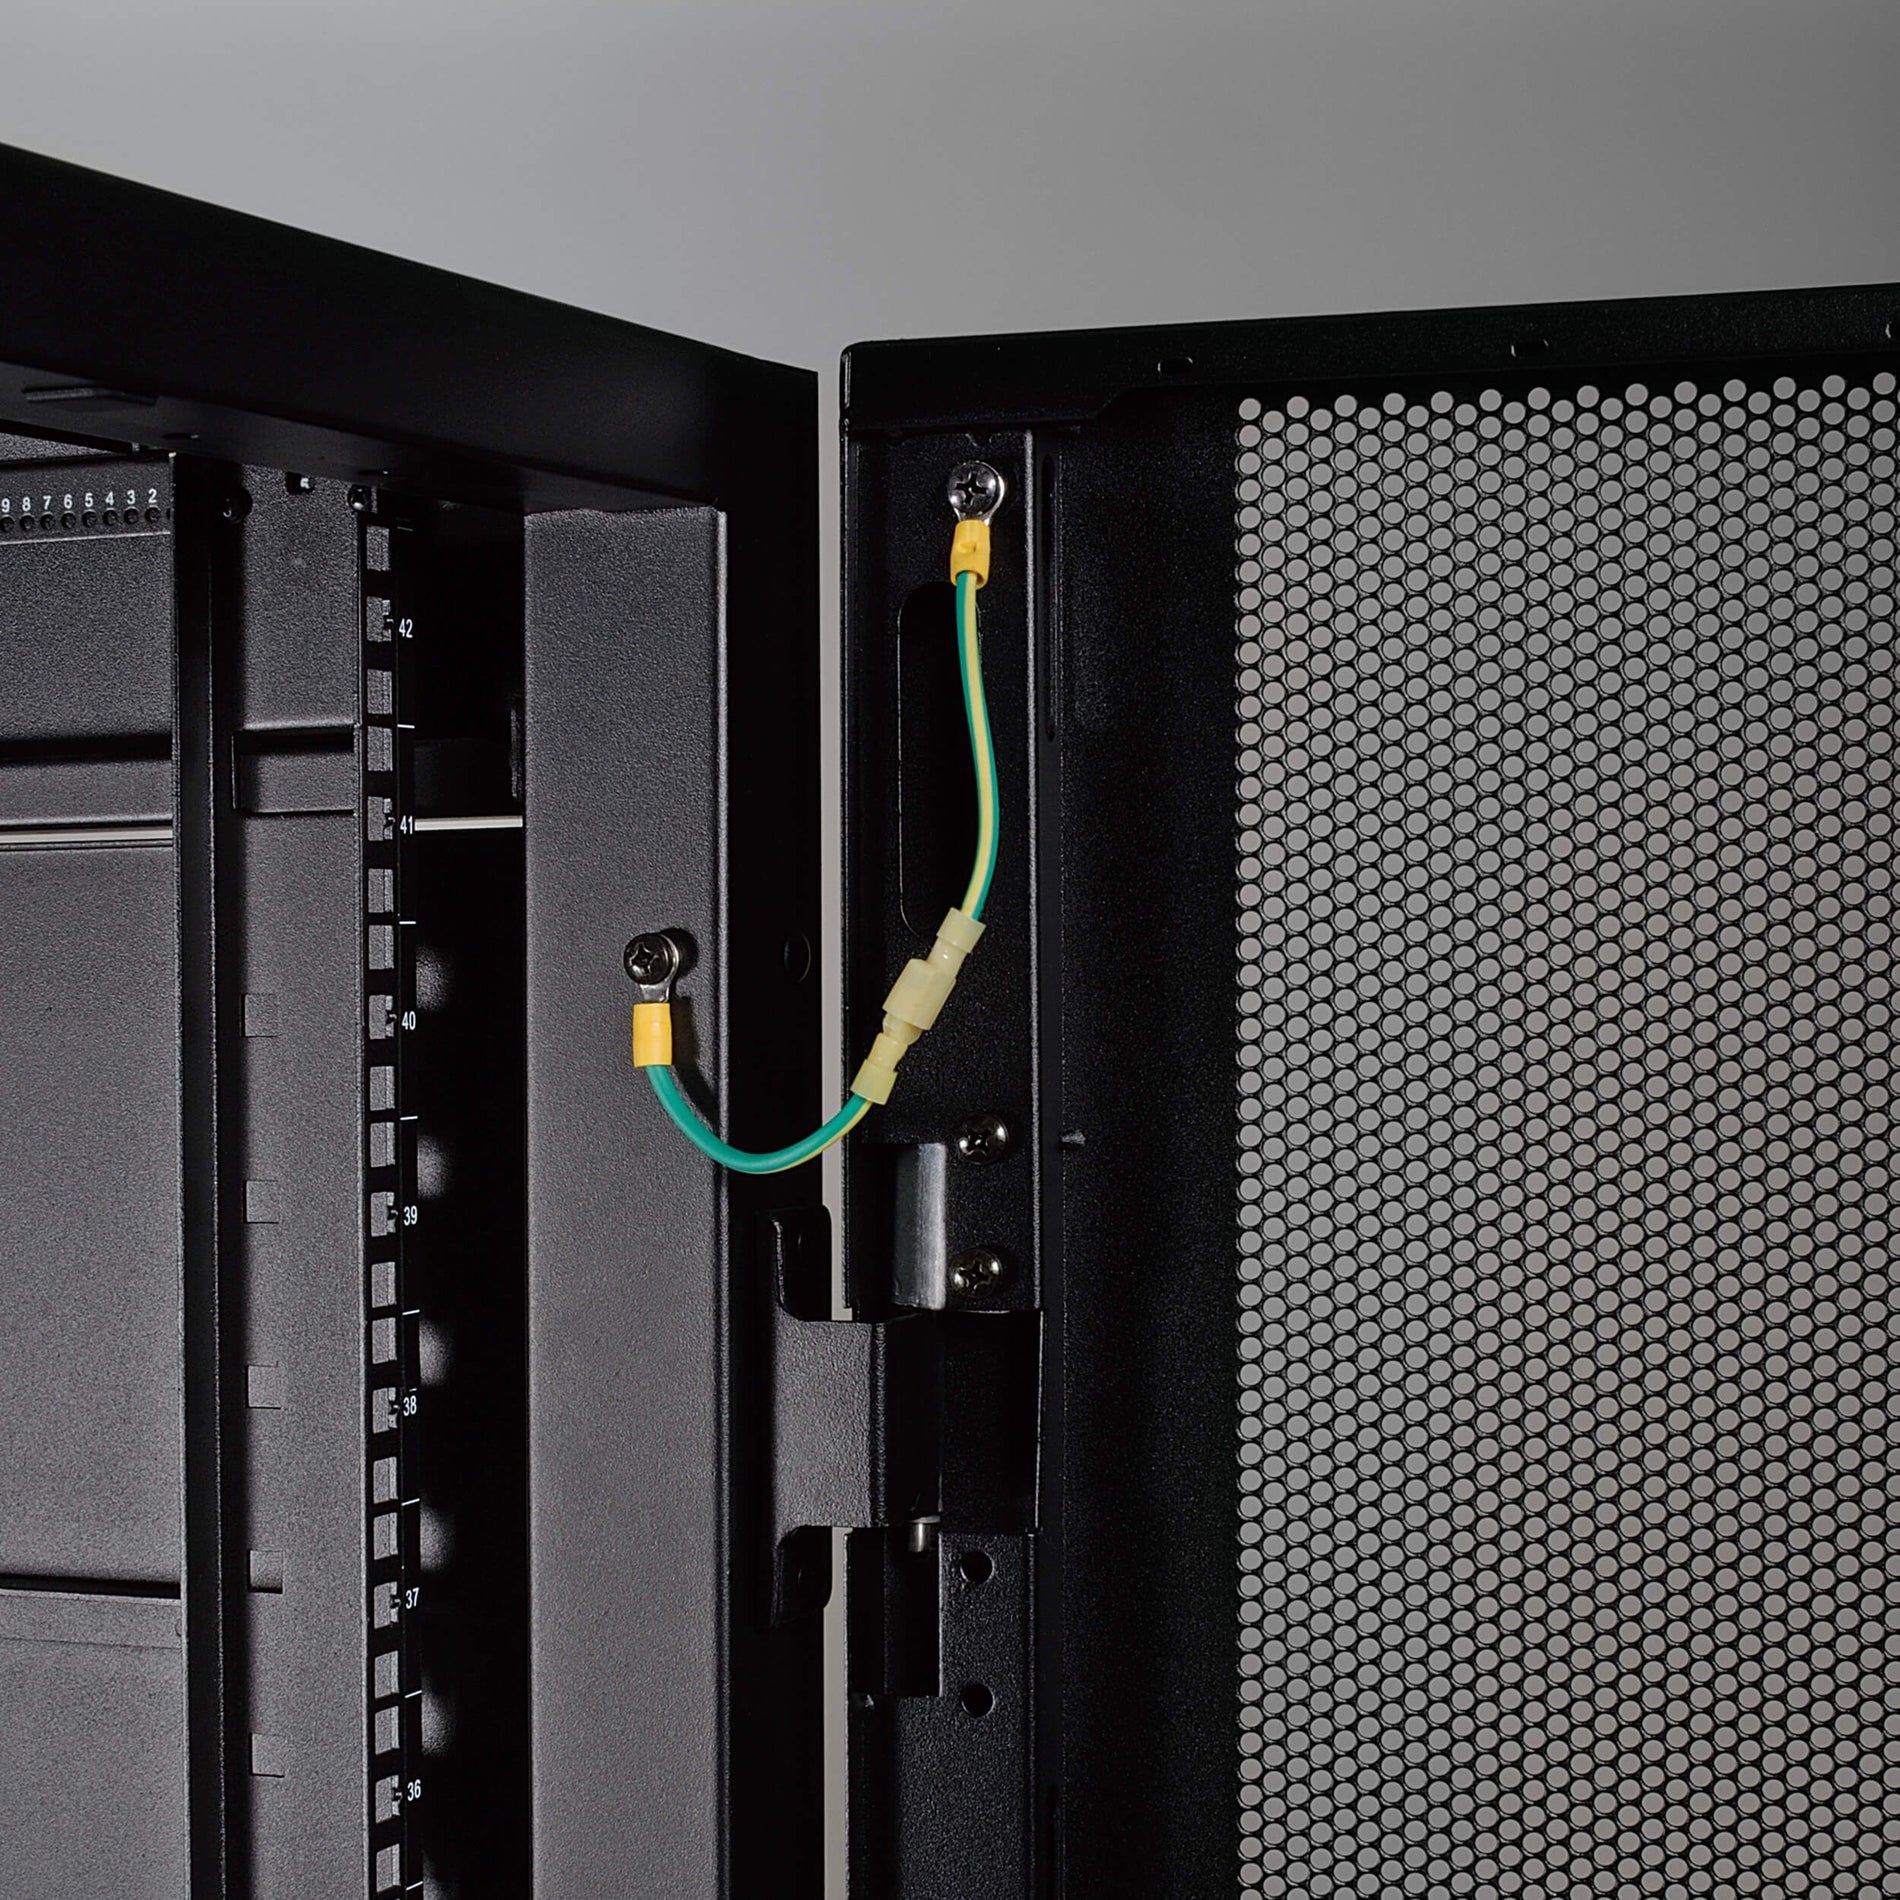 Tripp Lite SR42UB SmartRack Rack Enclosure Server Cabinet - 42U, 19" Width, 3000 lbs Load Capacity